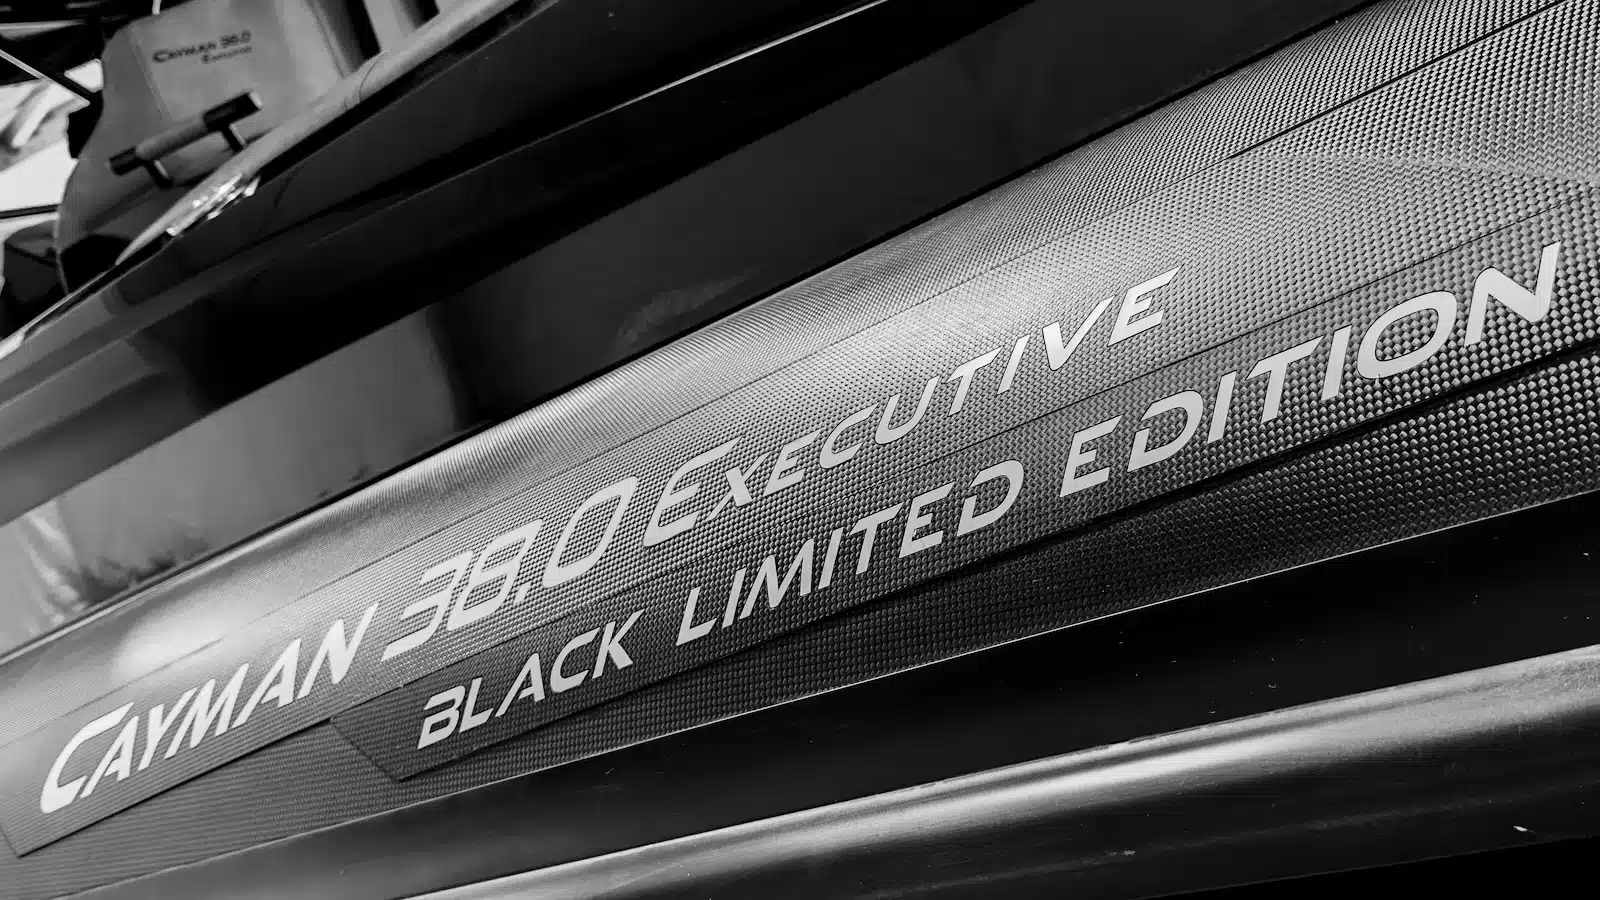 Cayman 38.0 Executive Black Limited Edition: Ranieri International unveils a new jewel in Miami.